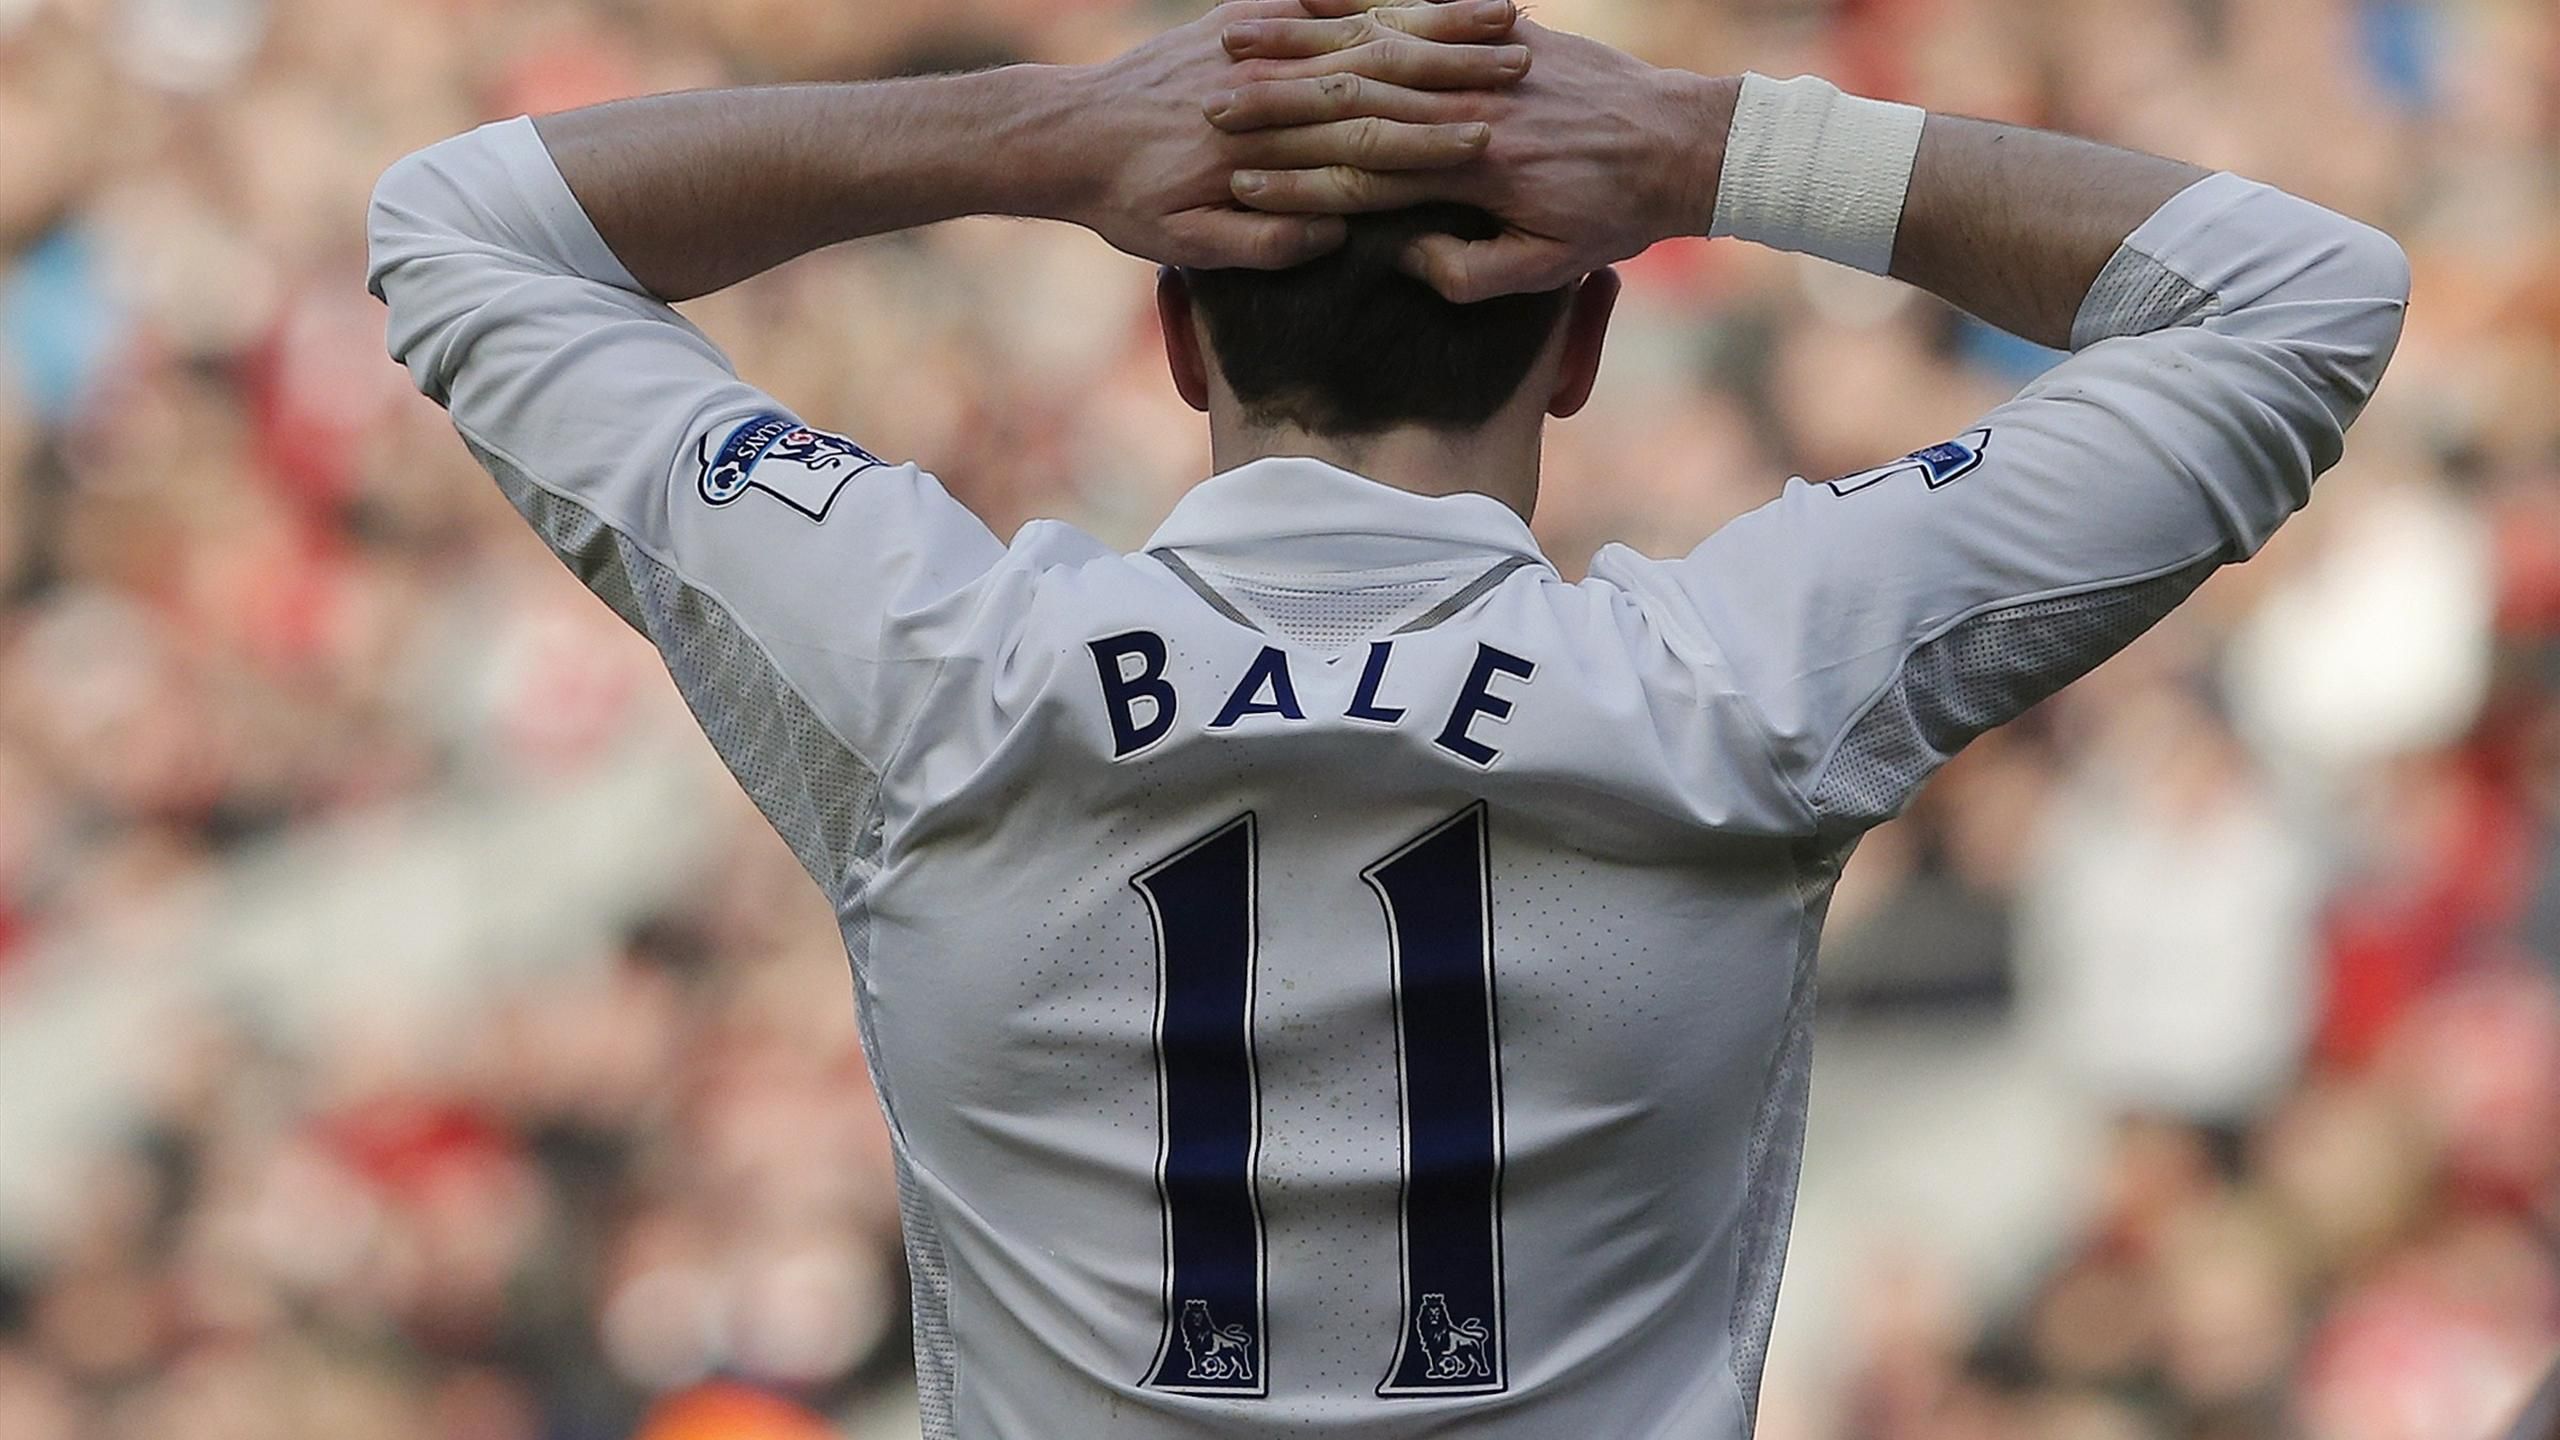 Real Madrid reserve number 11 shirt for Tottenham star Gareth Bale